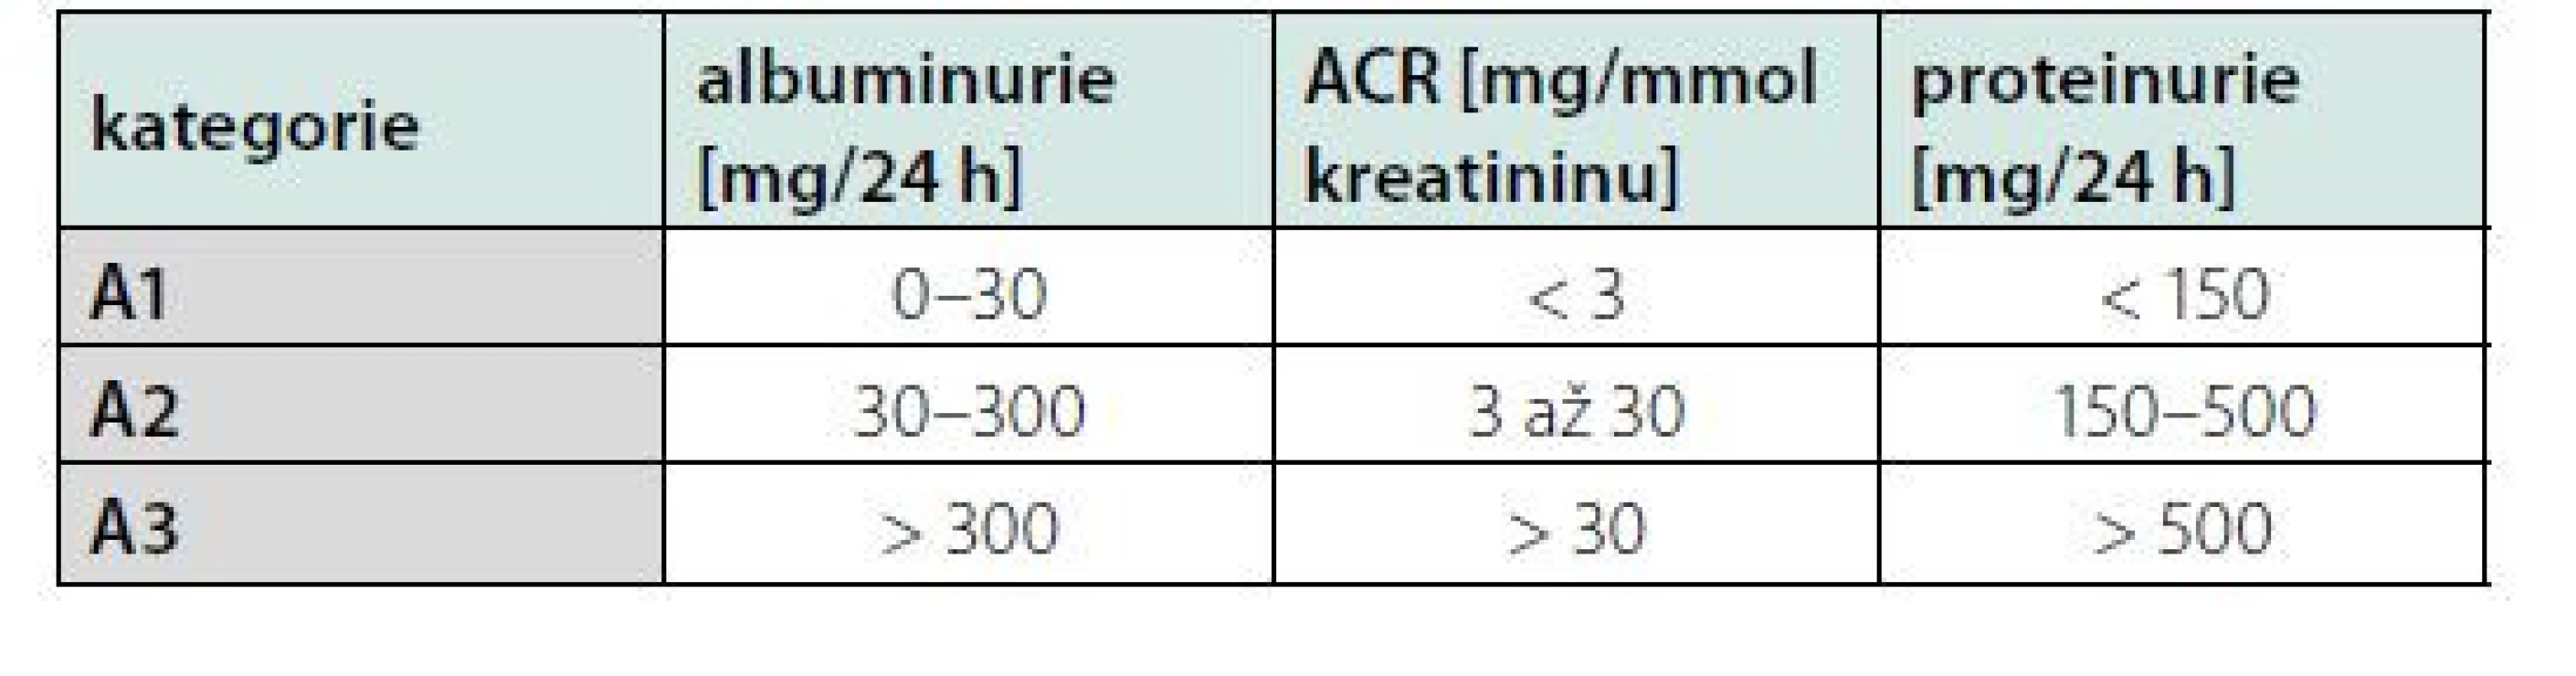 Kategorie CHRI (chronická renální insuficience) podle albuminurie
a porovnání s proteinurií